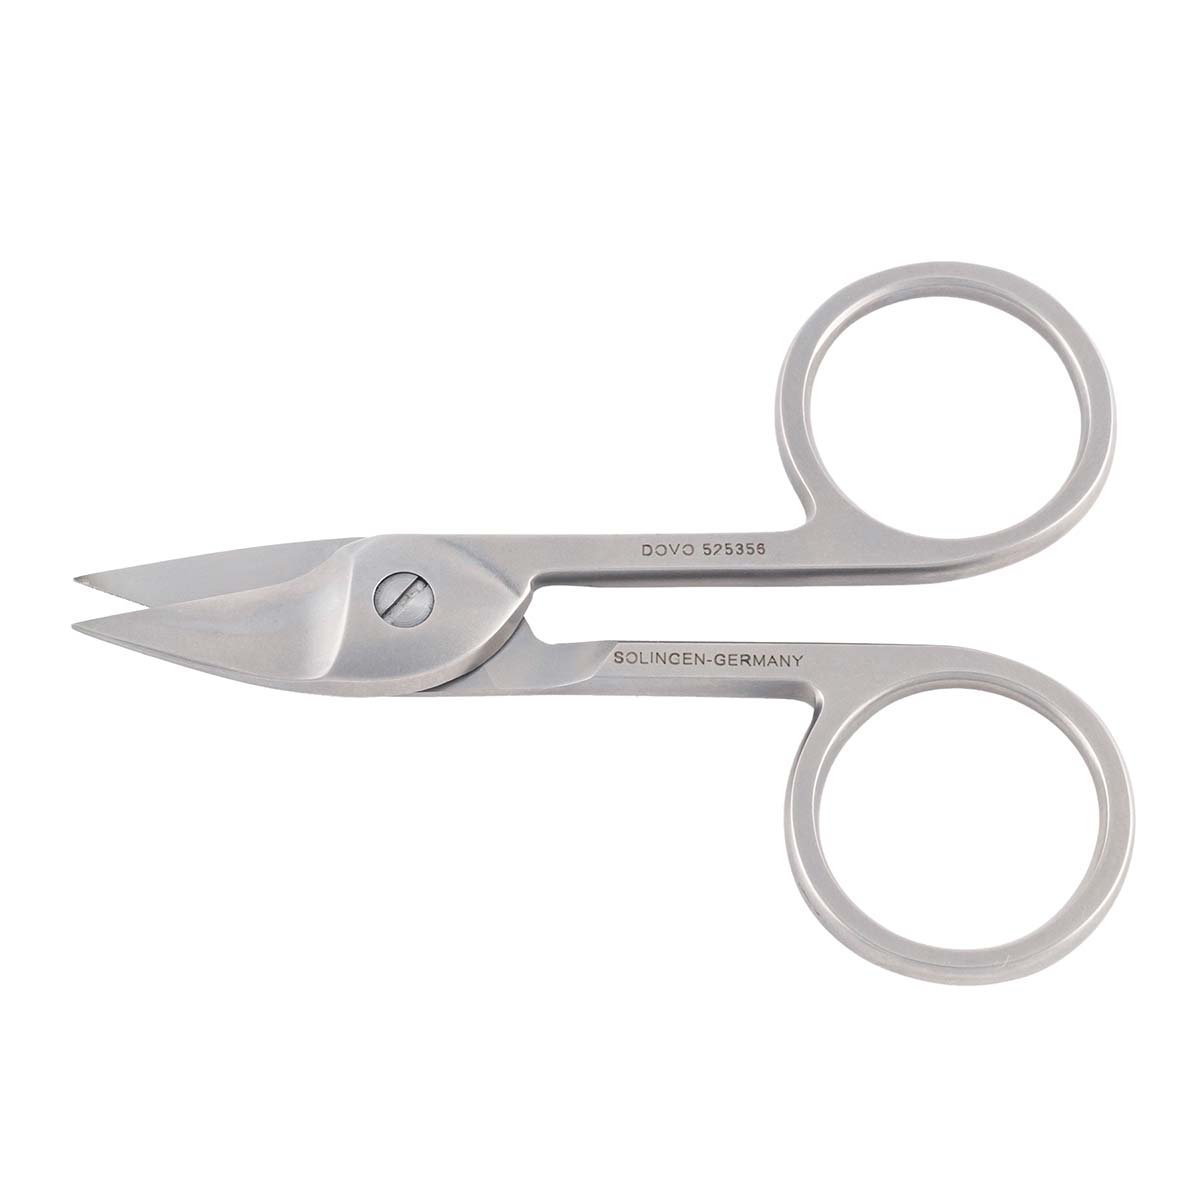 Review - 12 Sheffield Industrial Scissors